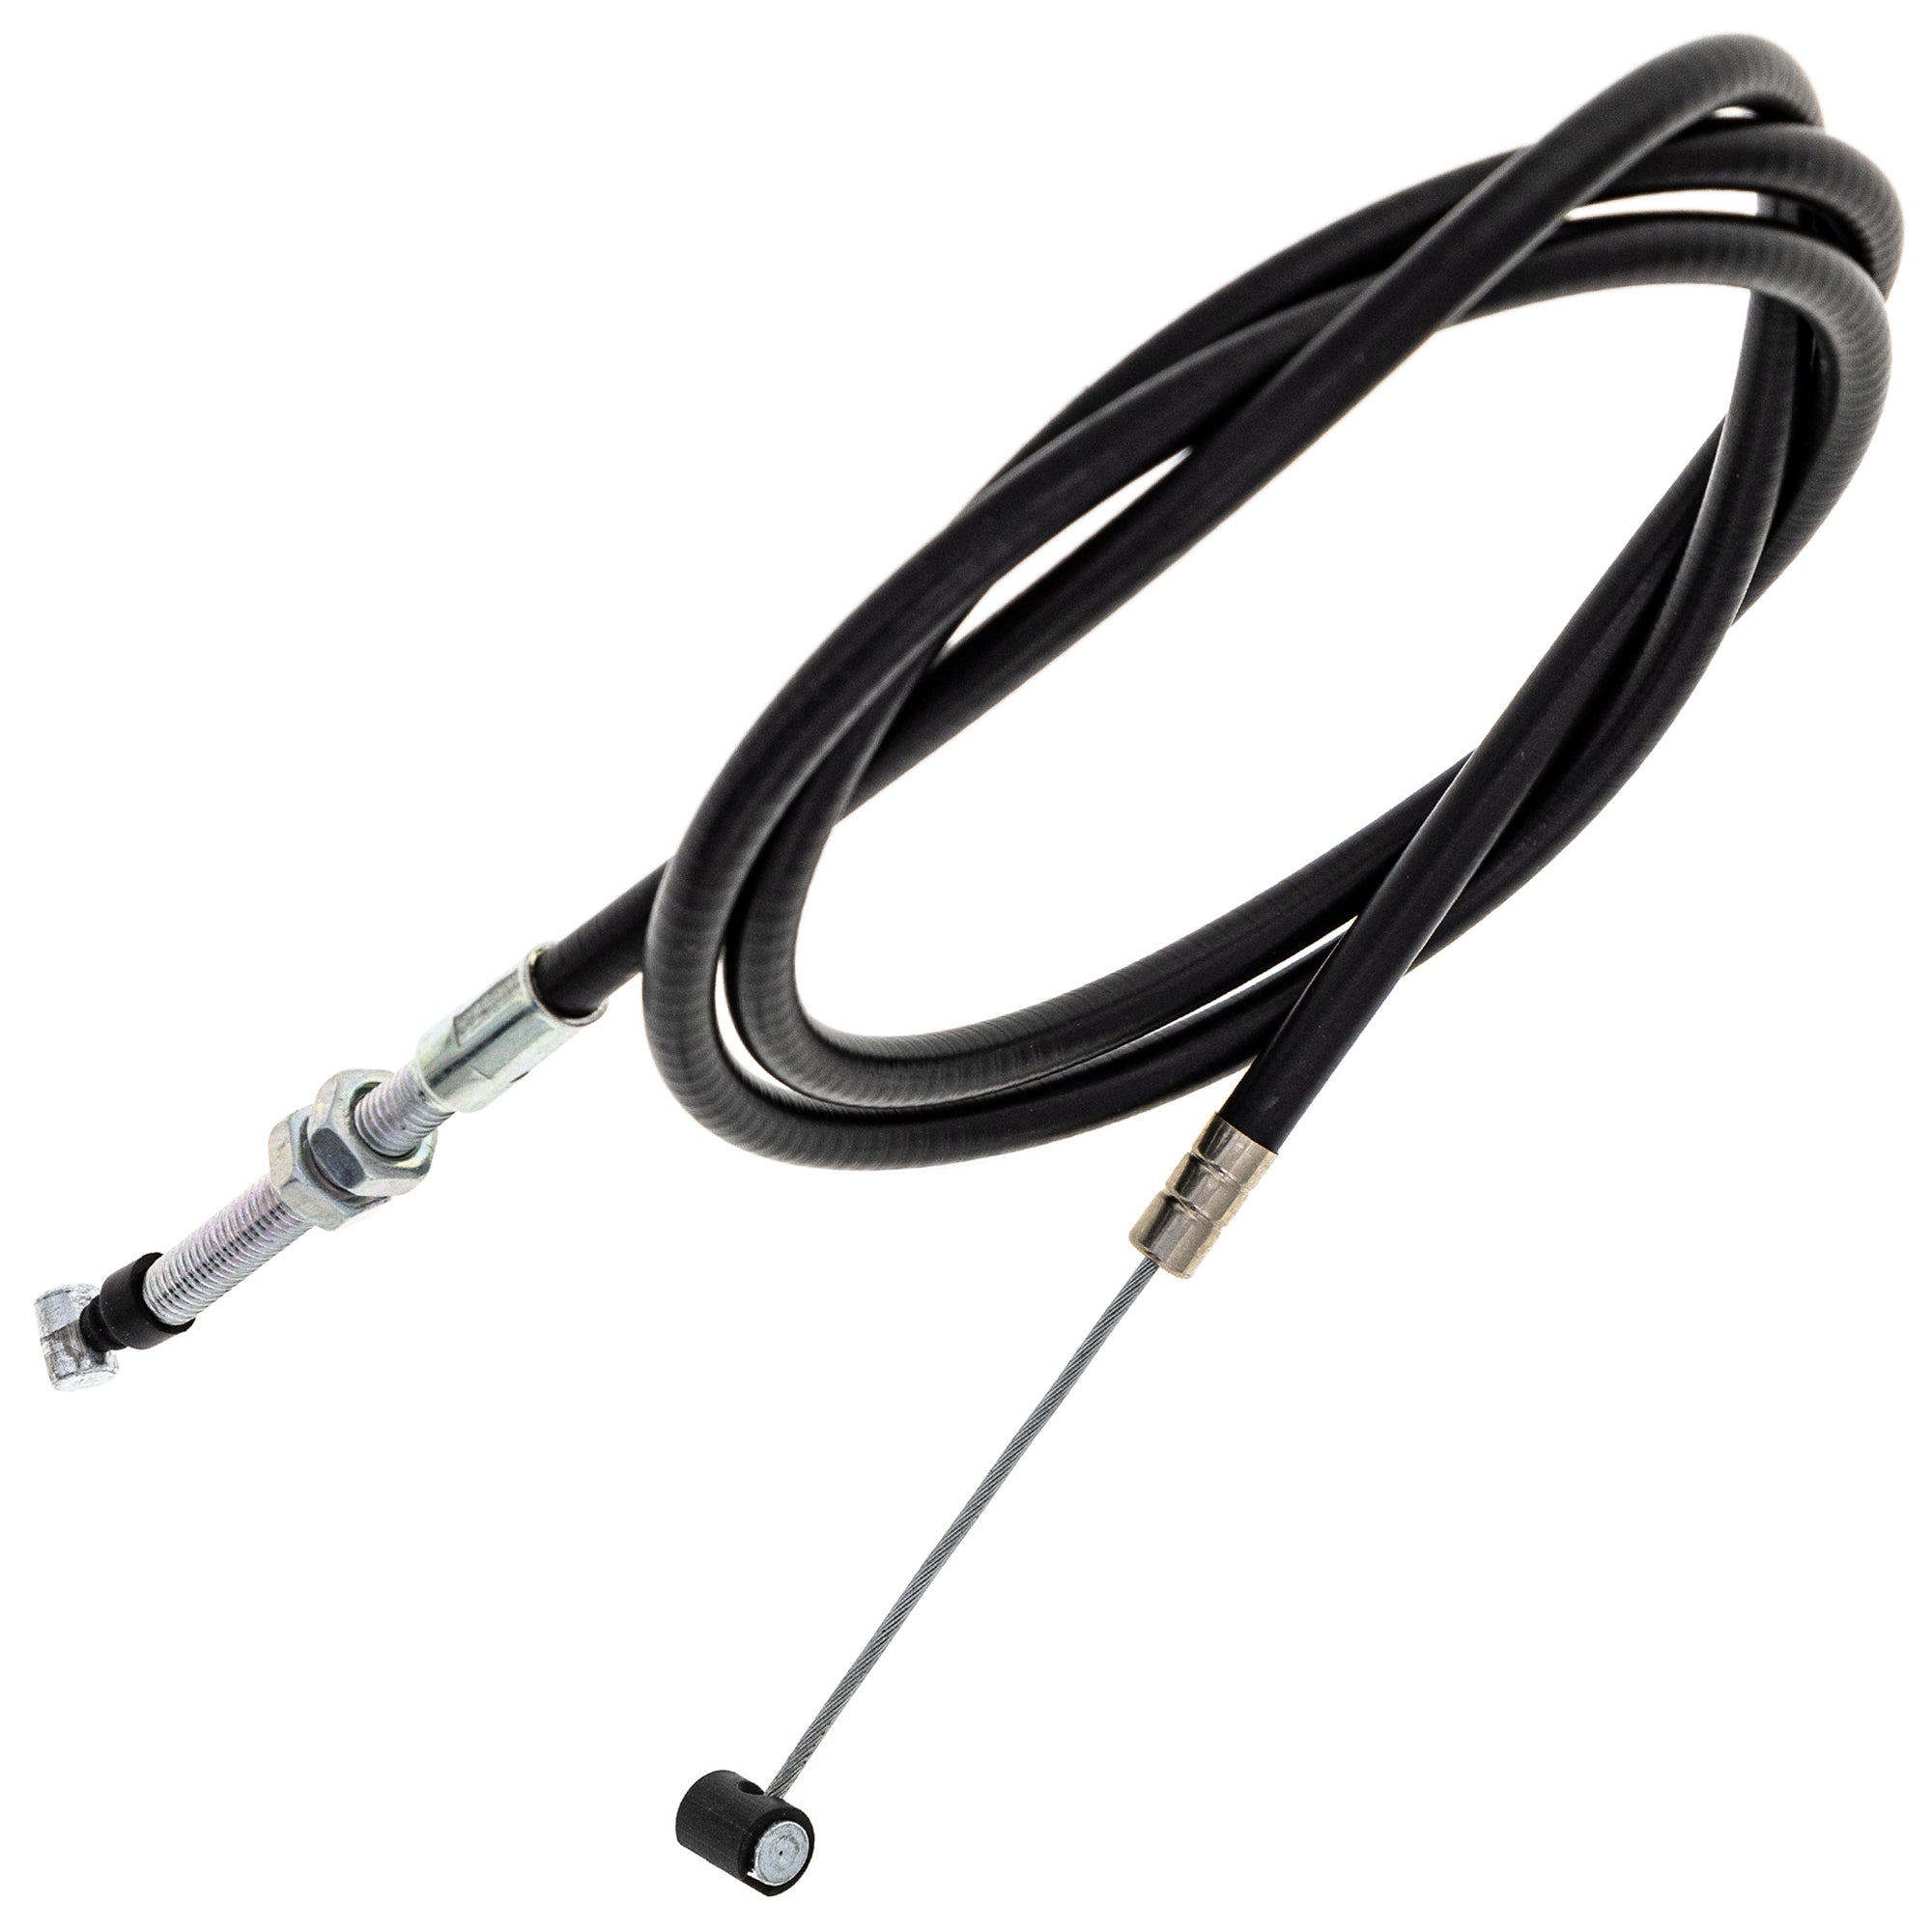 Clutch Cable for Kawasaki KDX200 KX125 54011-1166 54011-1157